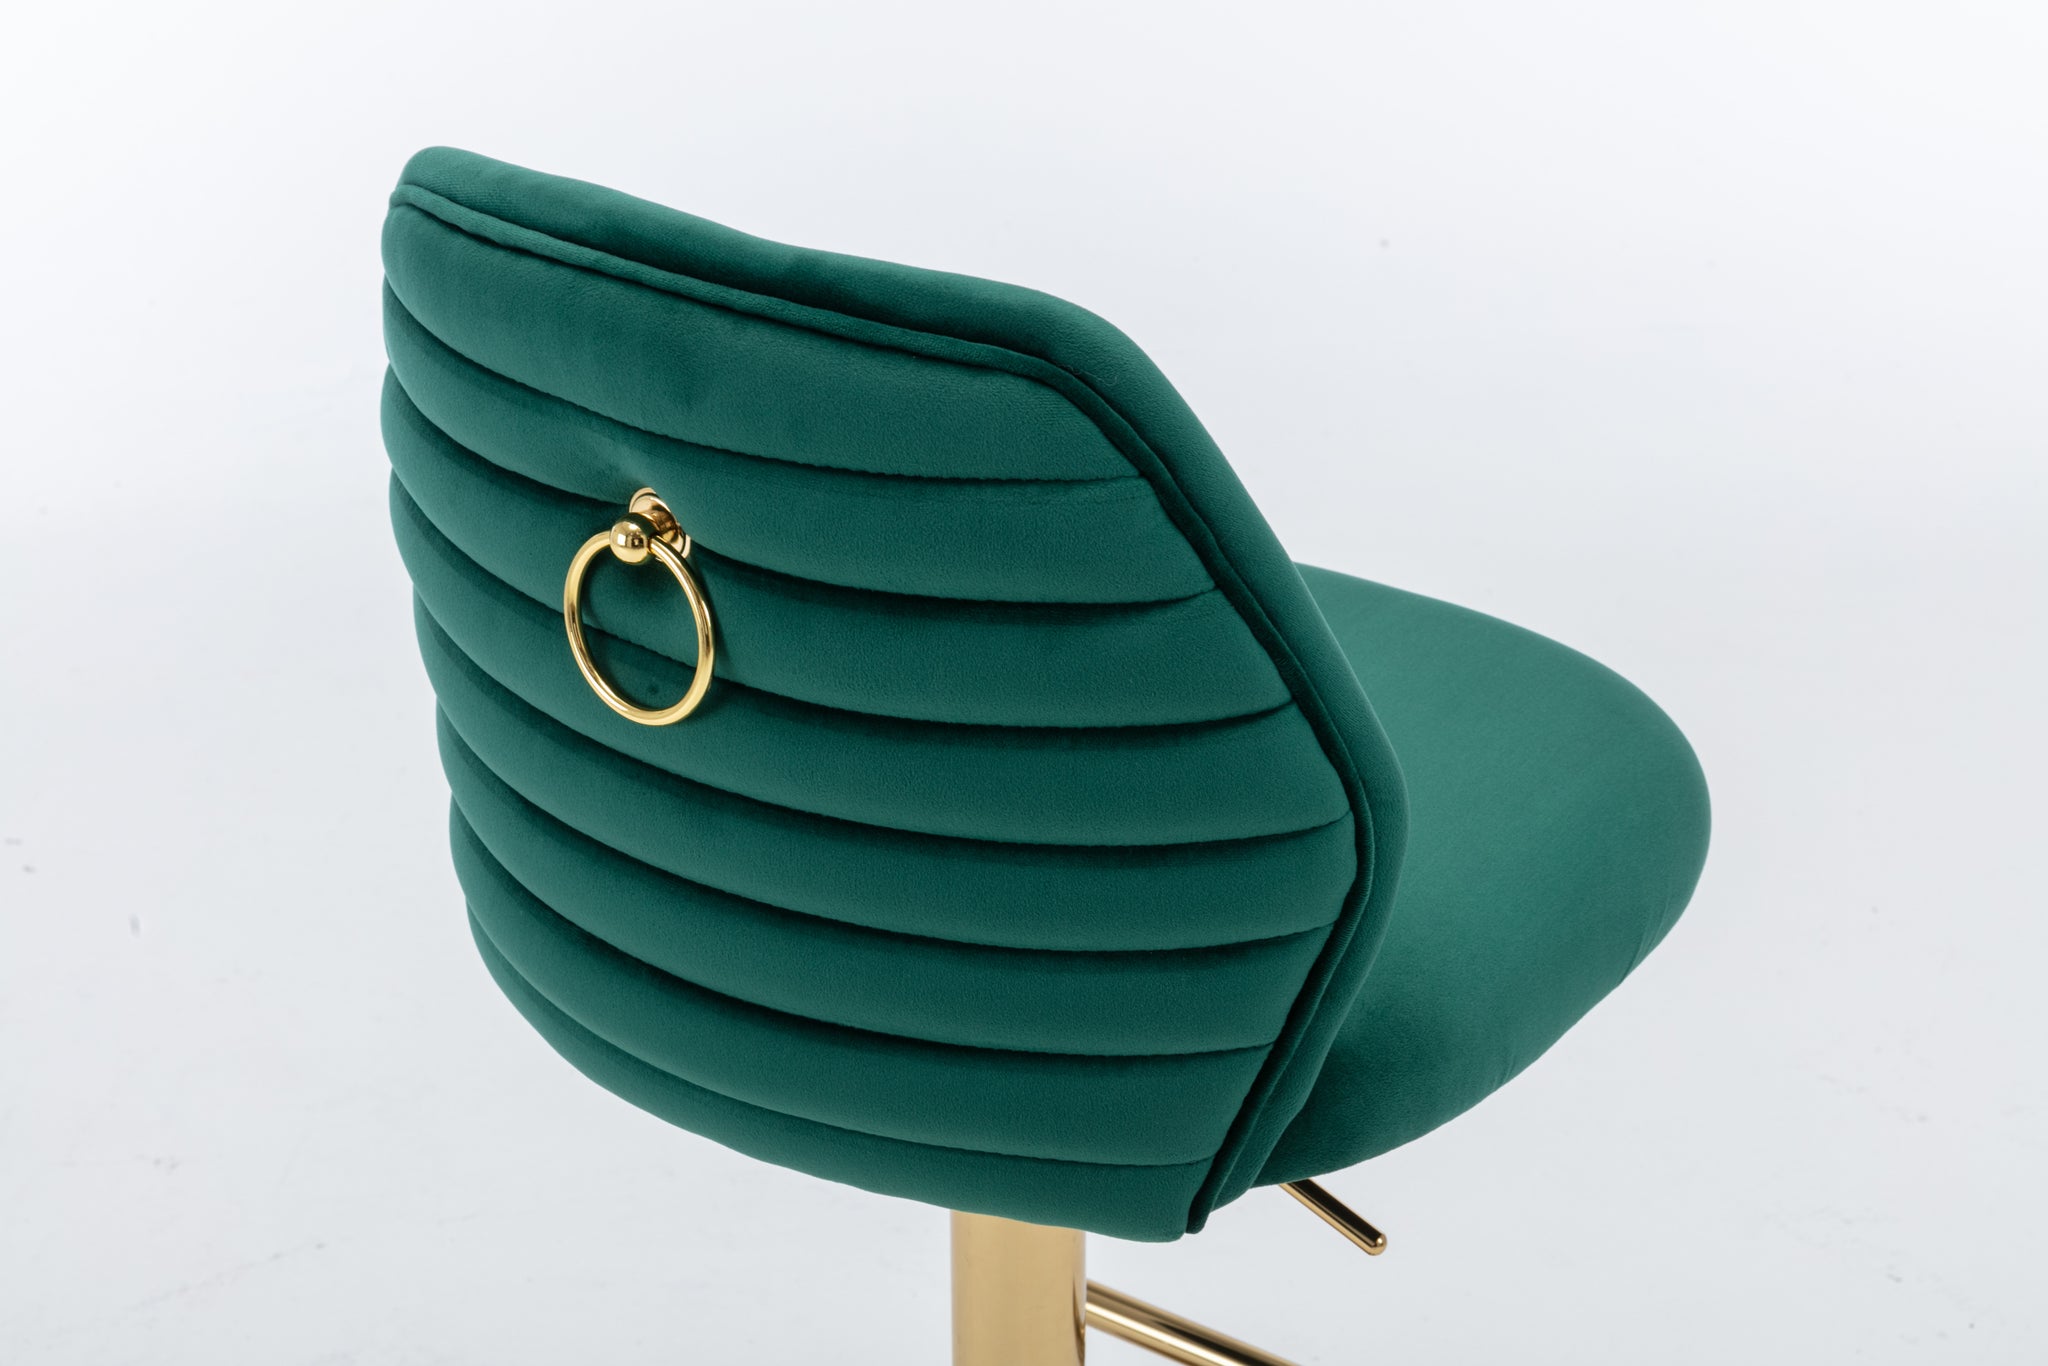 Swivel Bar Stools Chair Set of 2 Modern Adjustable green-foam-fabric